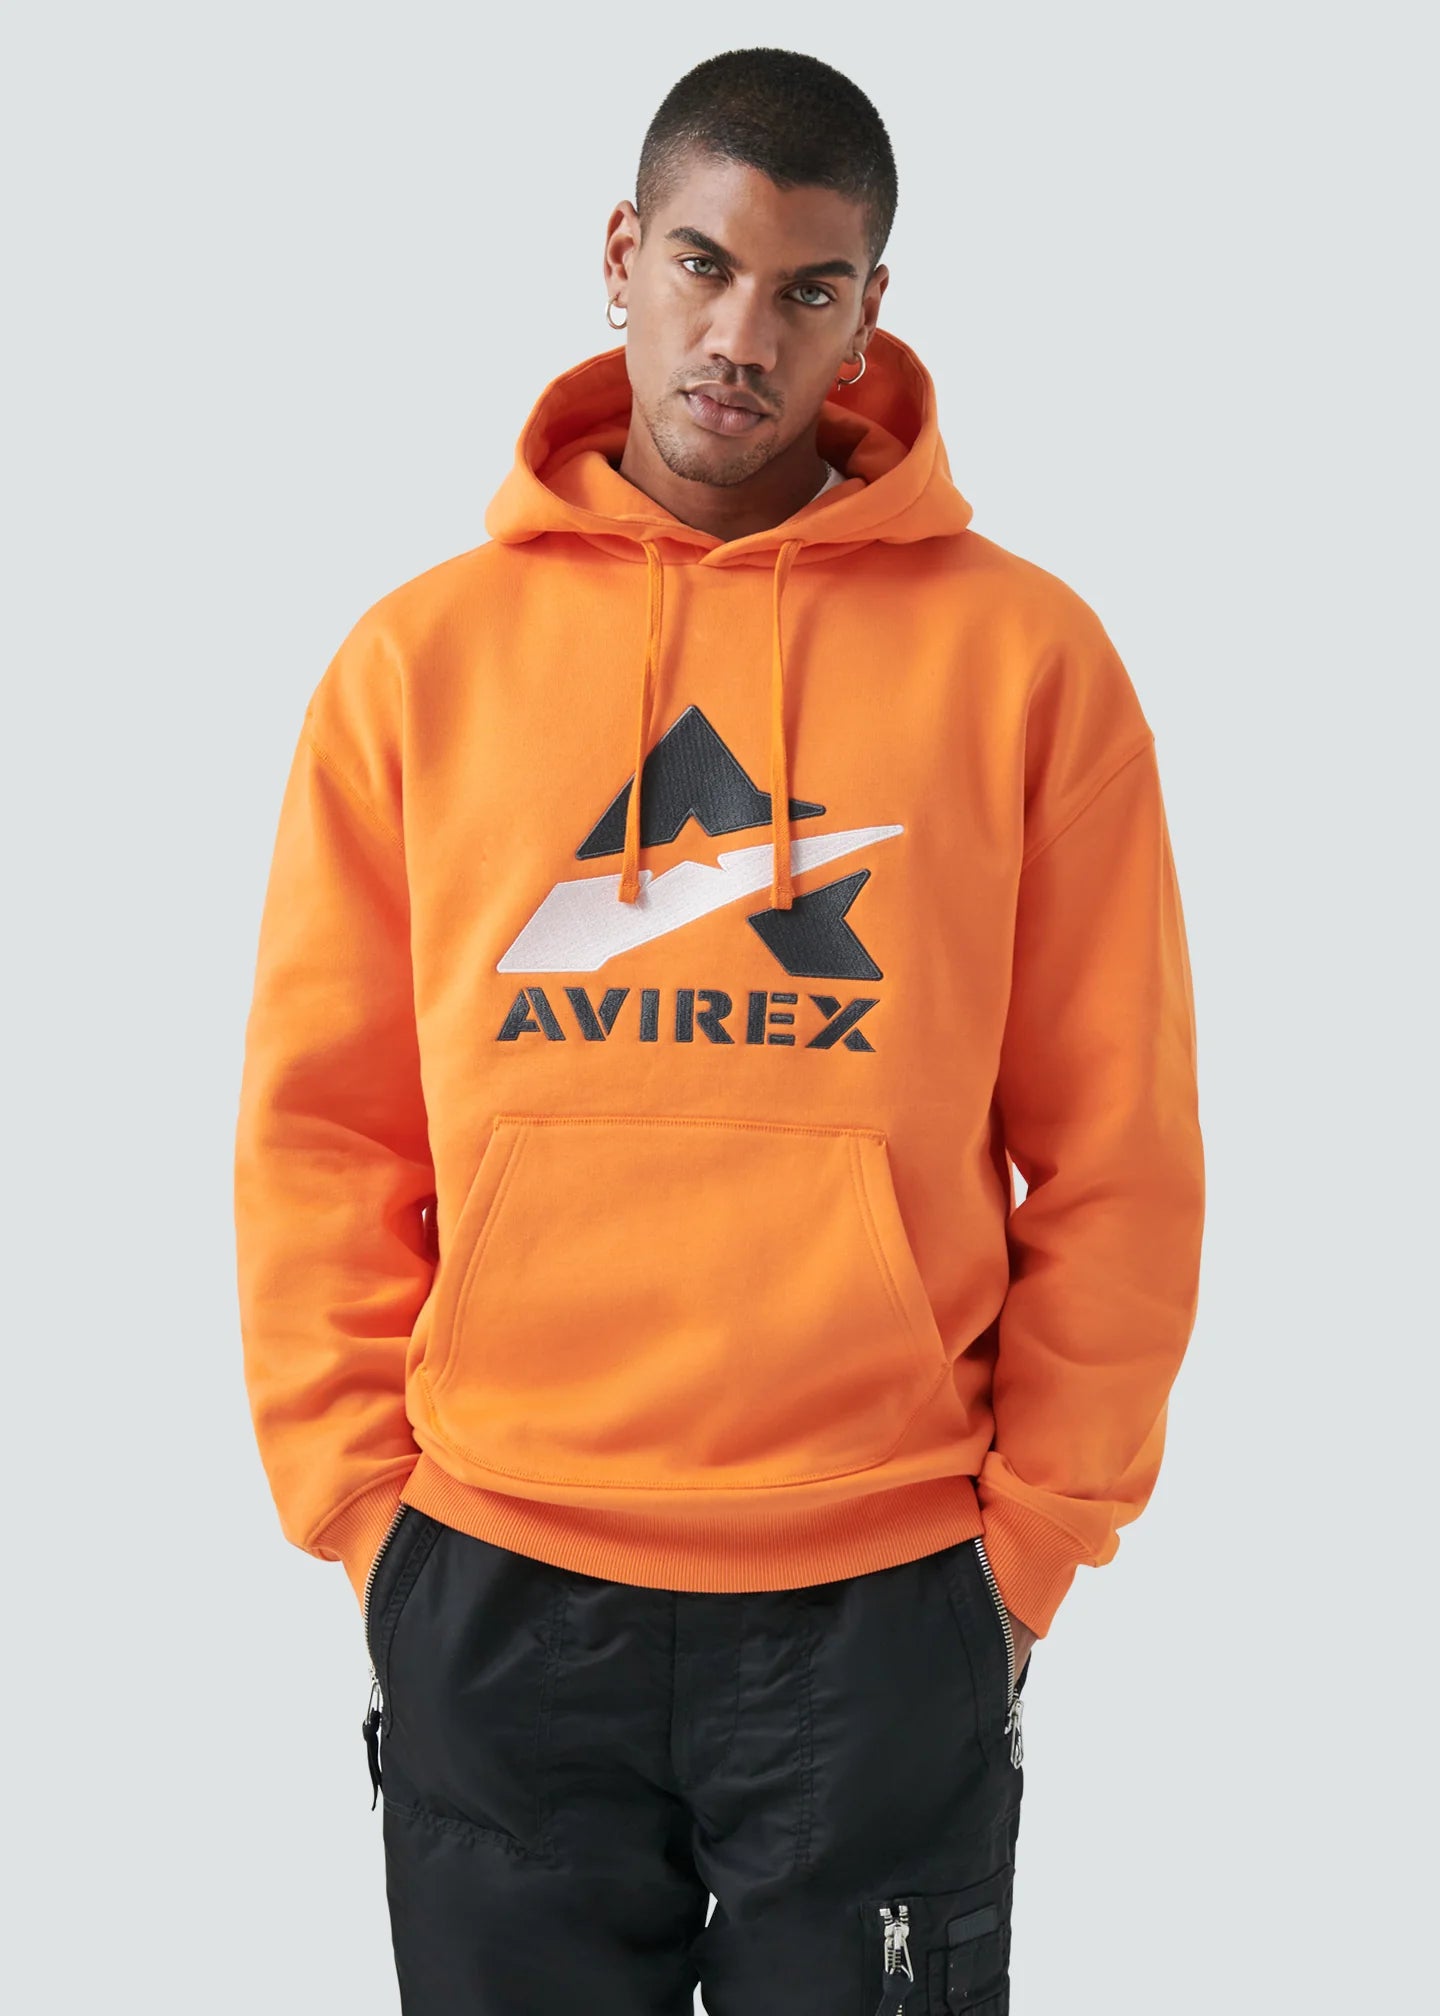 Avirex-Mens-The-Barksdale-Hoody-Orange-Front